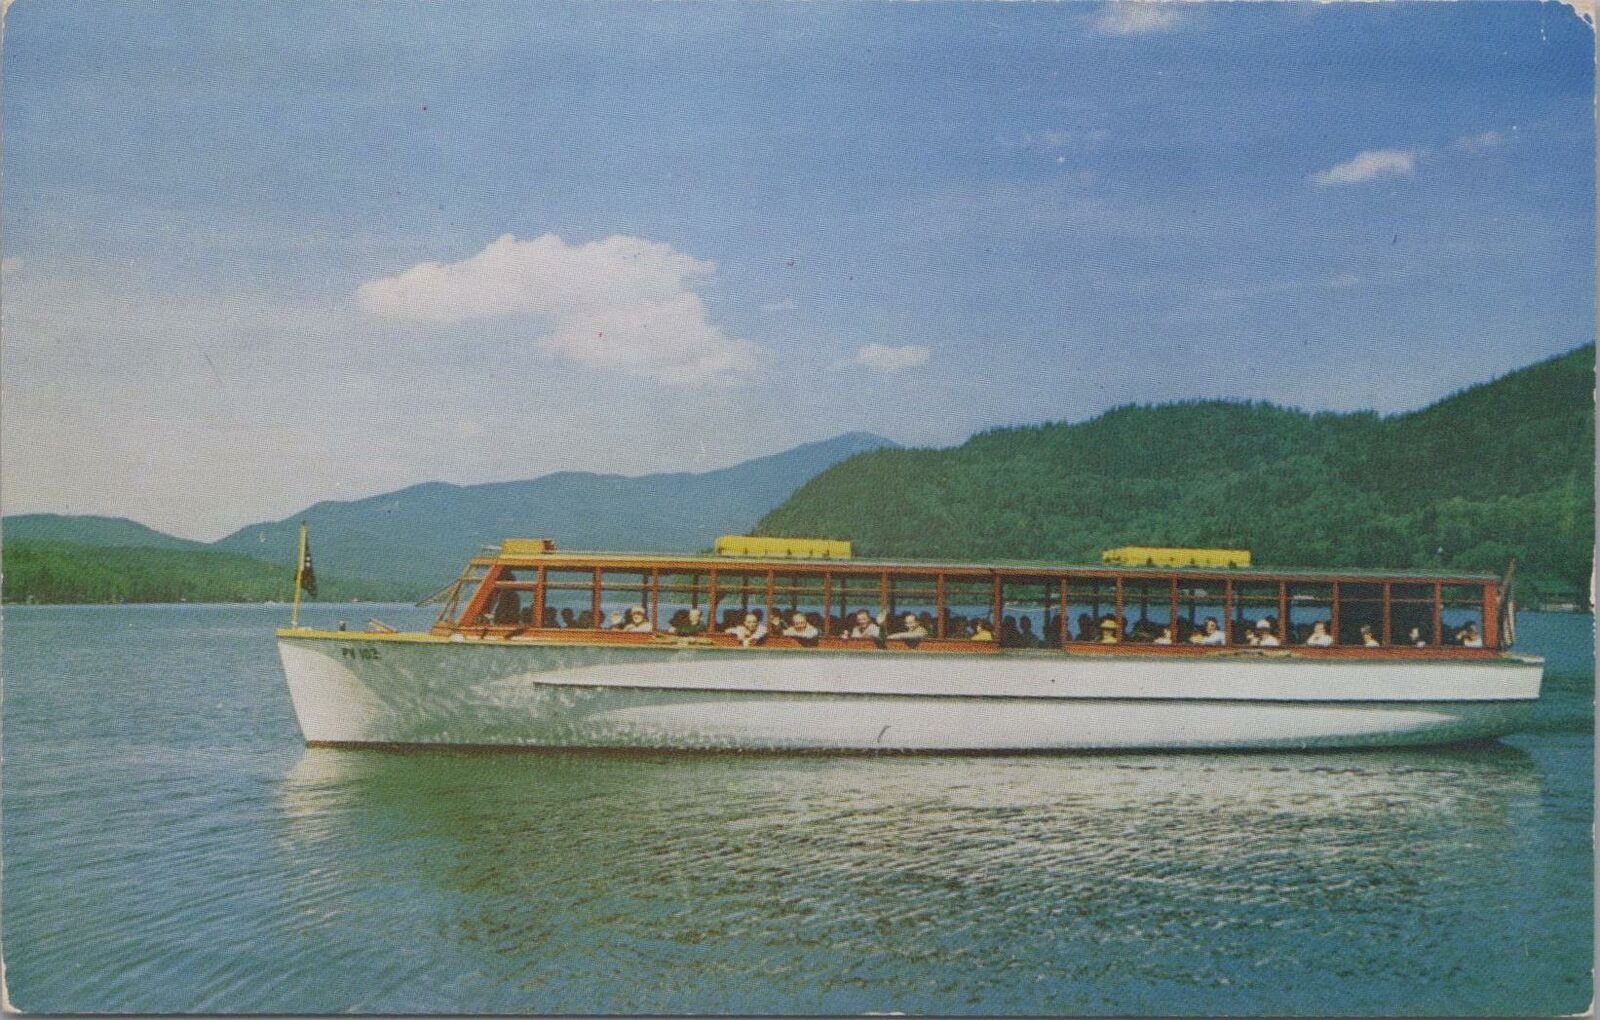 Postcard Ship The Doris Sightseeing Boat Adirondack Waters 1955